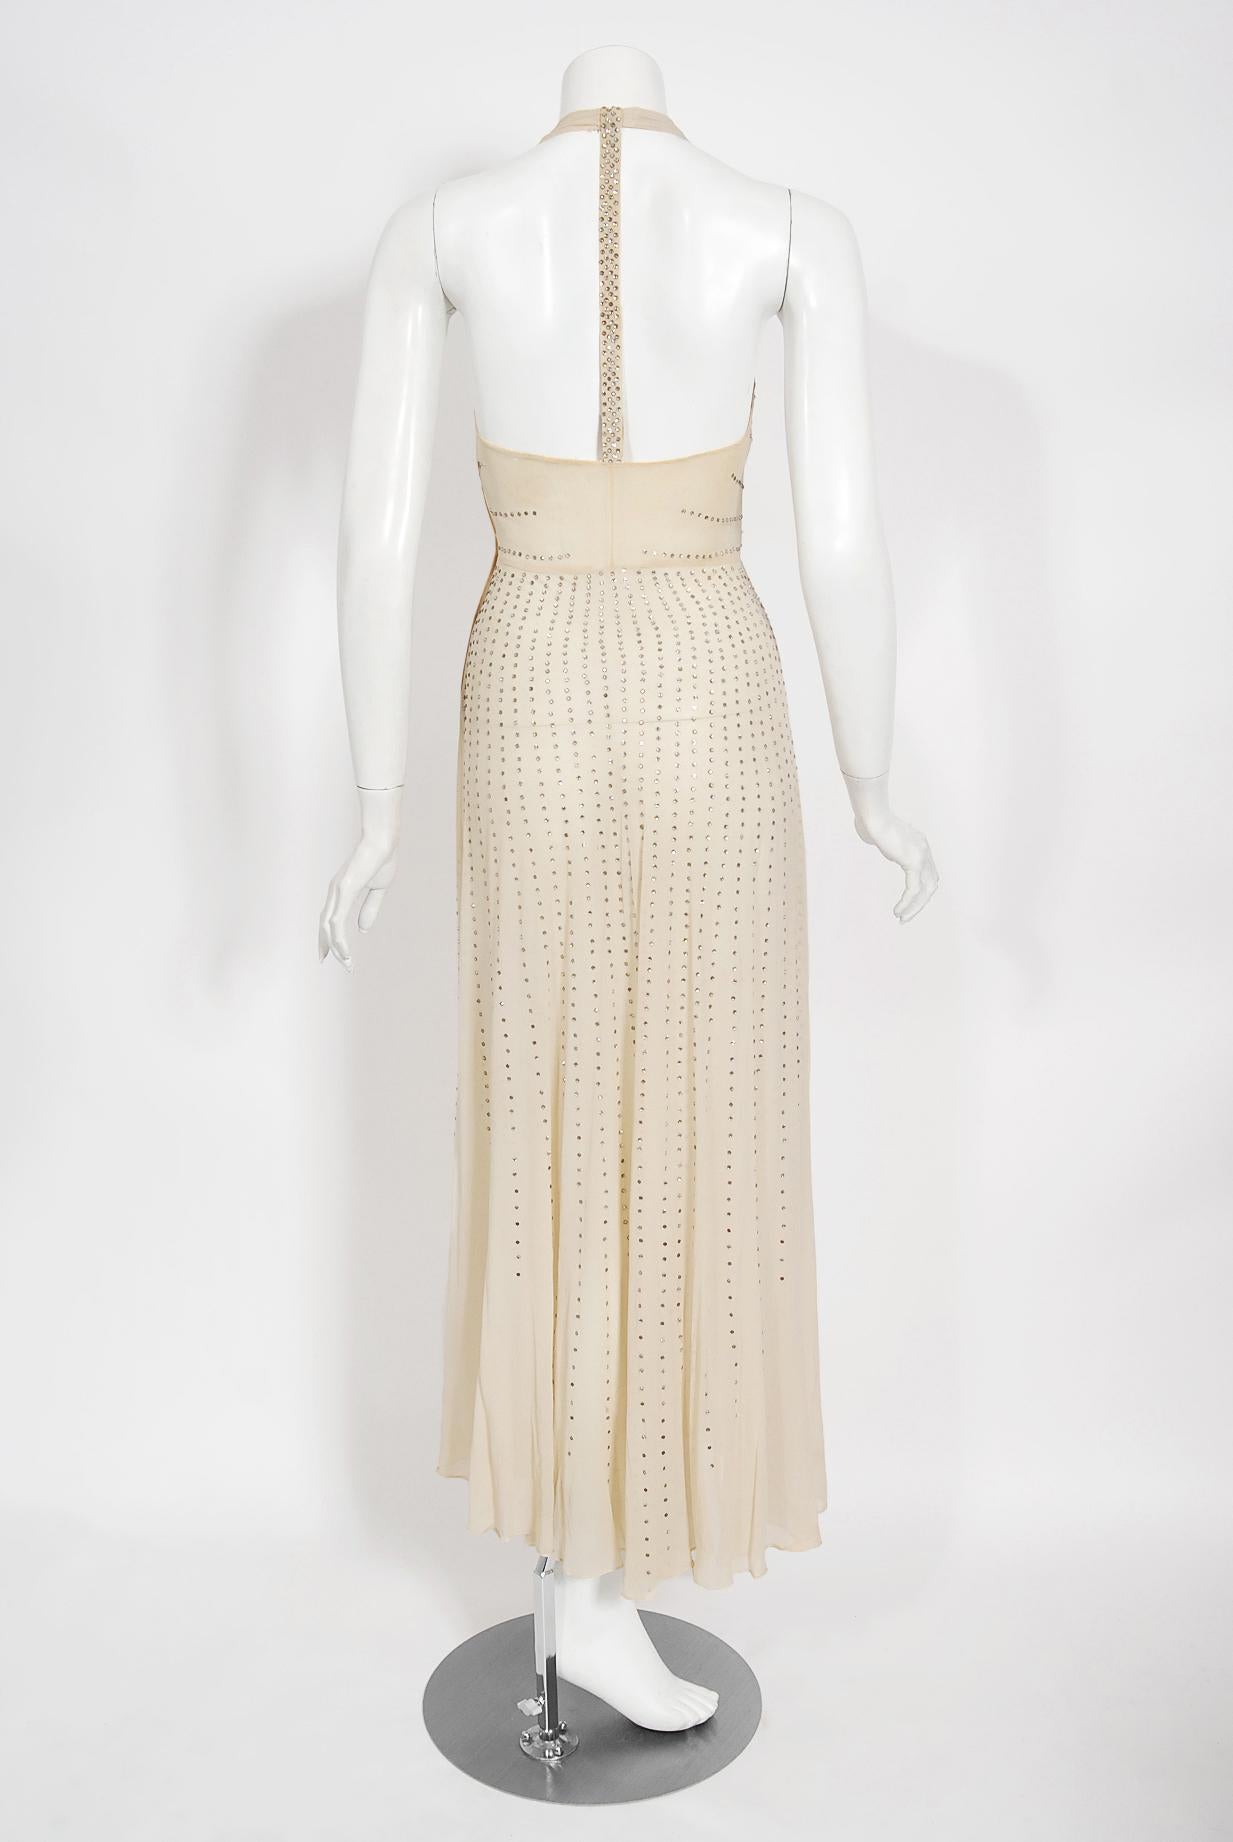 Vintage 1930's Rhinestone Studded Sheer Ivory Chiffon Bias-Cut Halter Dress Gown 5